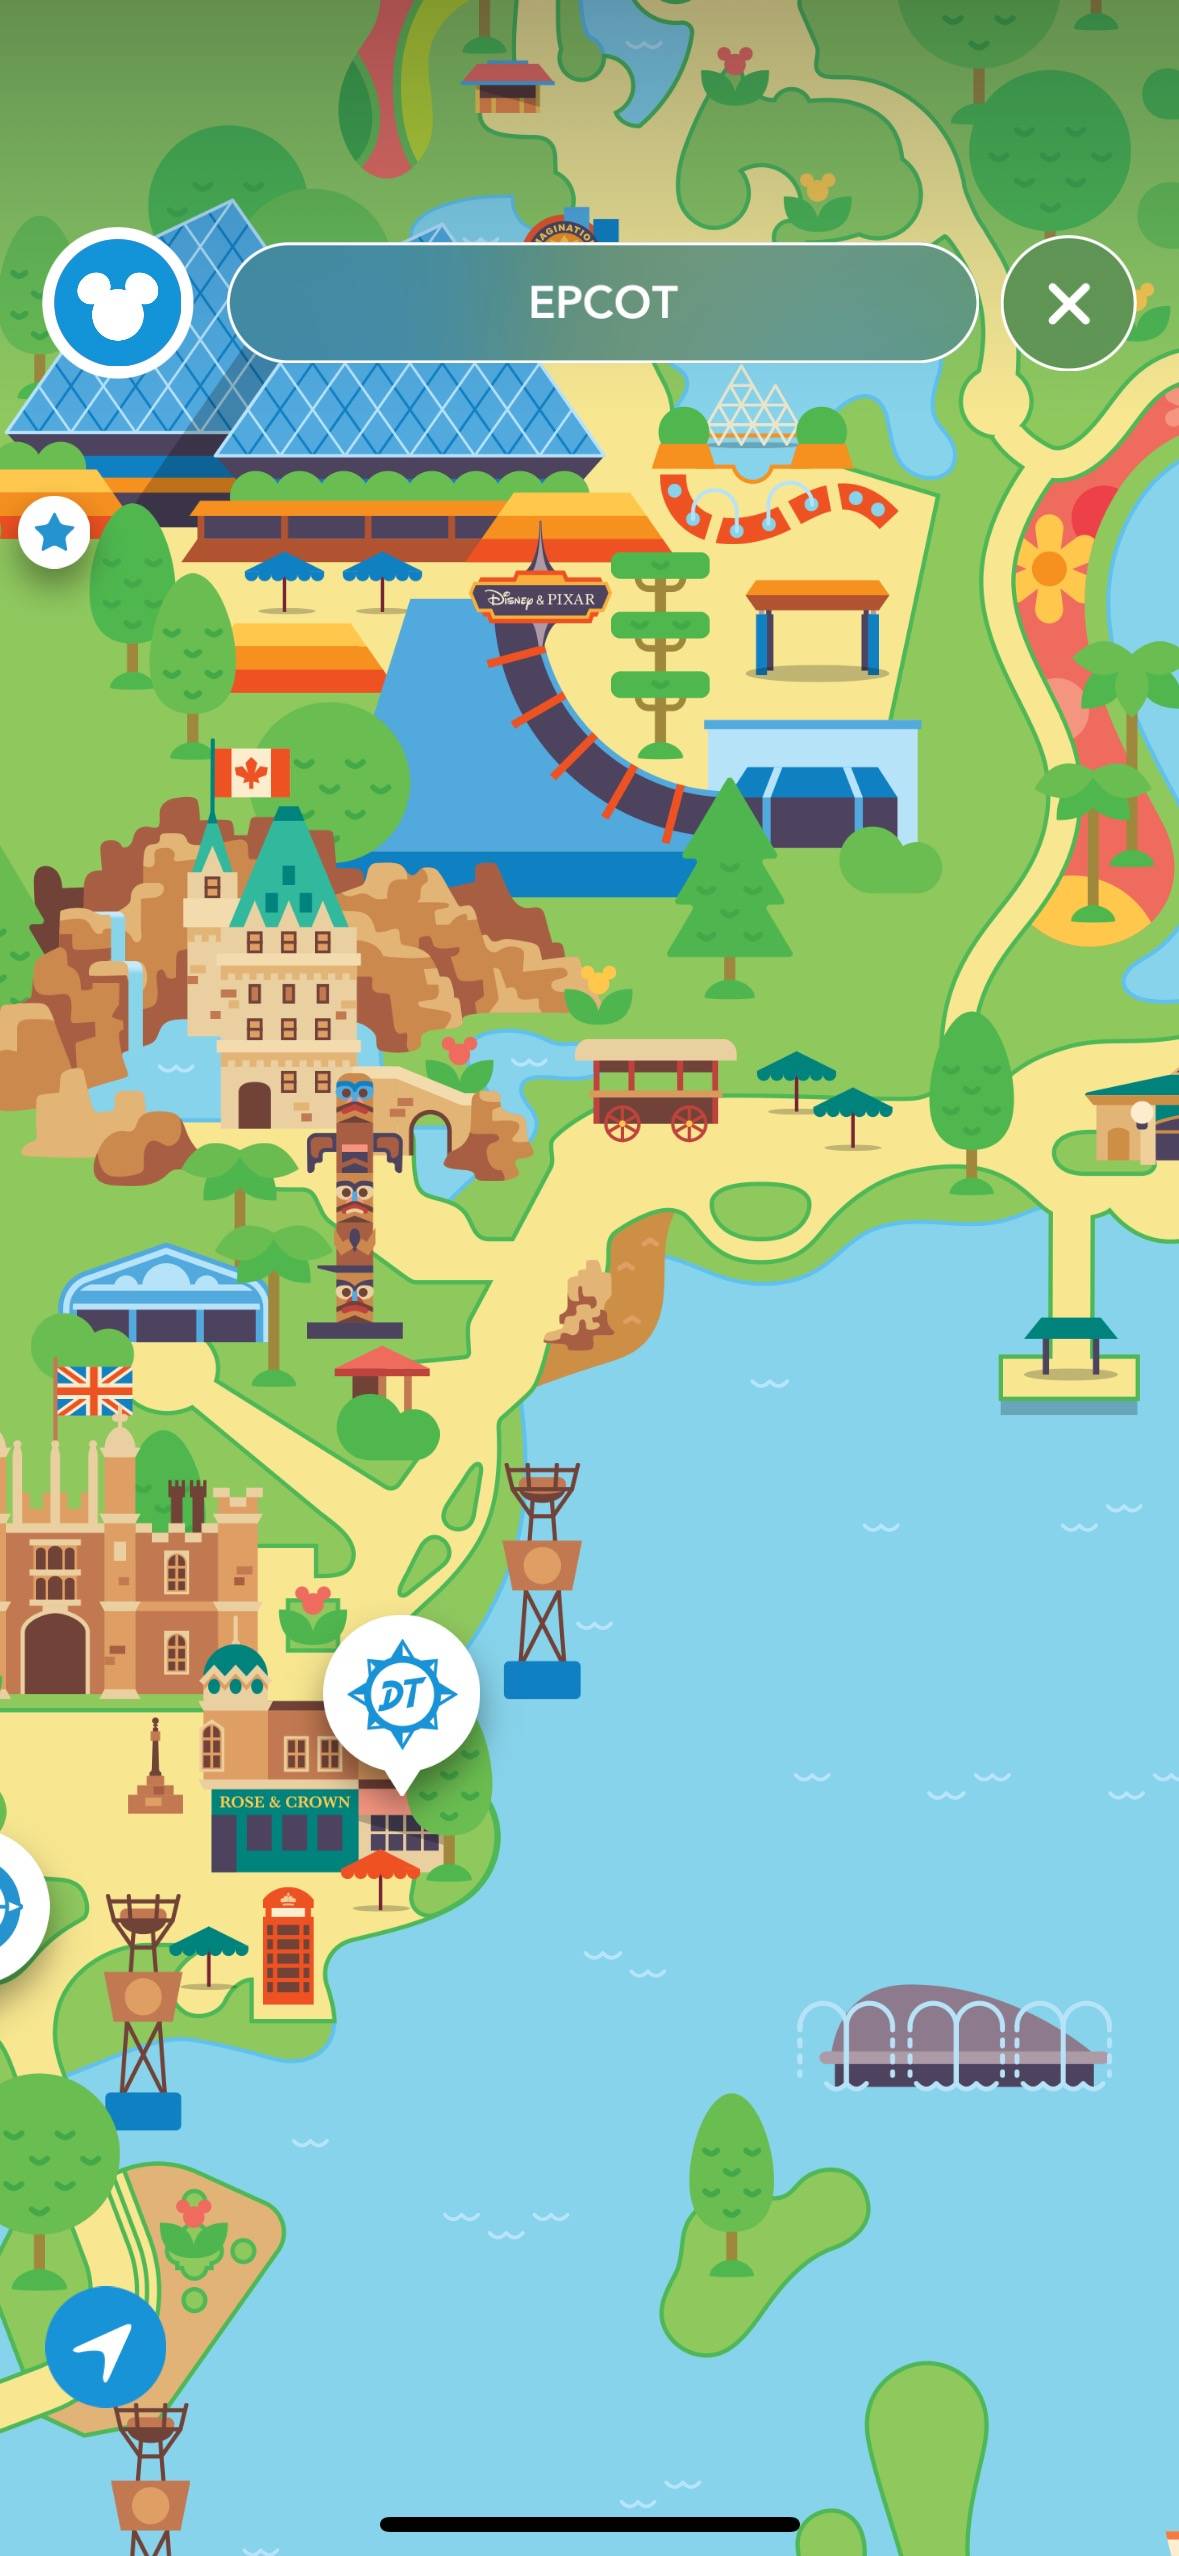 Disney's DuckTales World Showcase Adventure added to Play Disney app